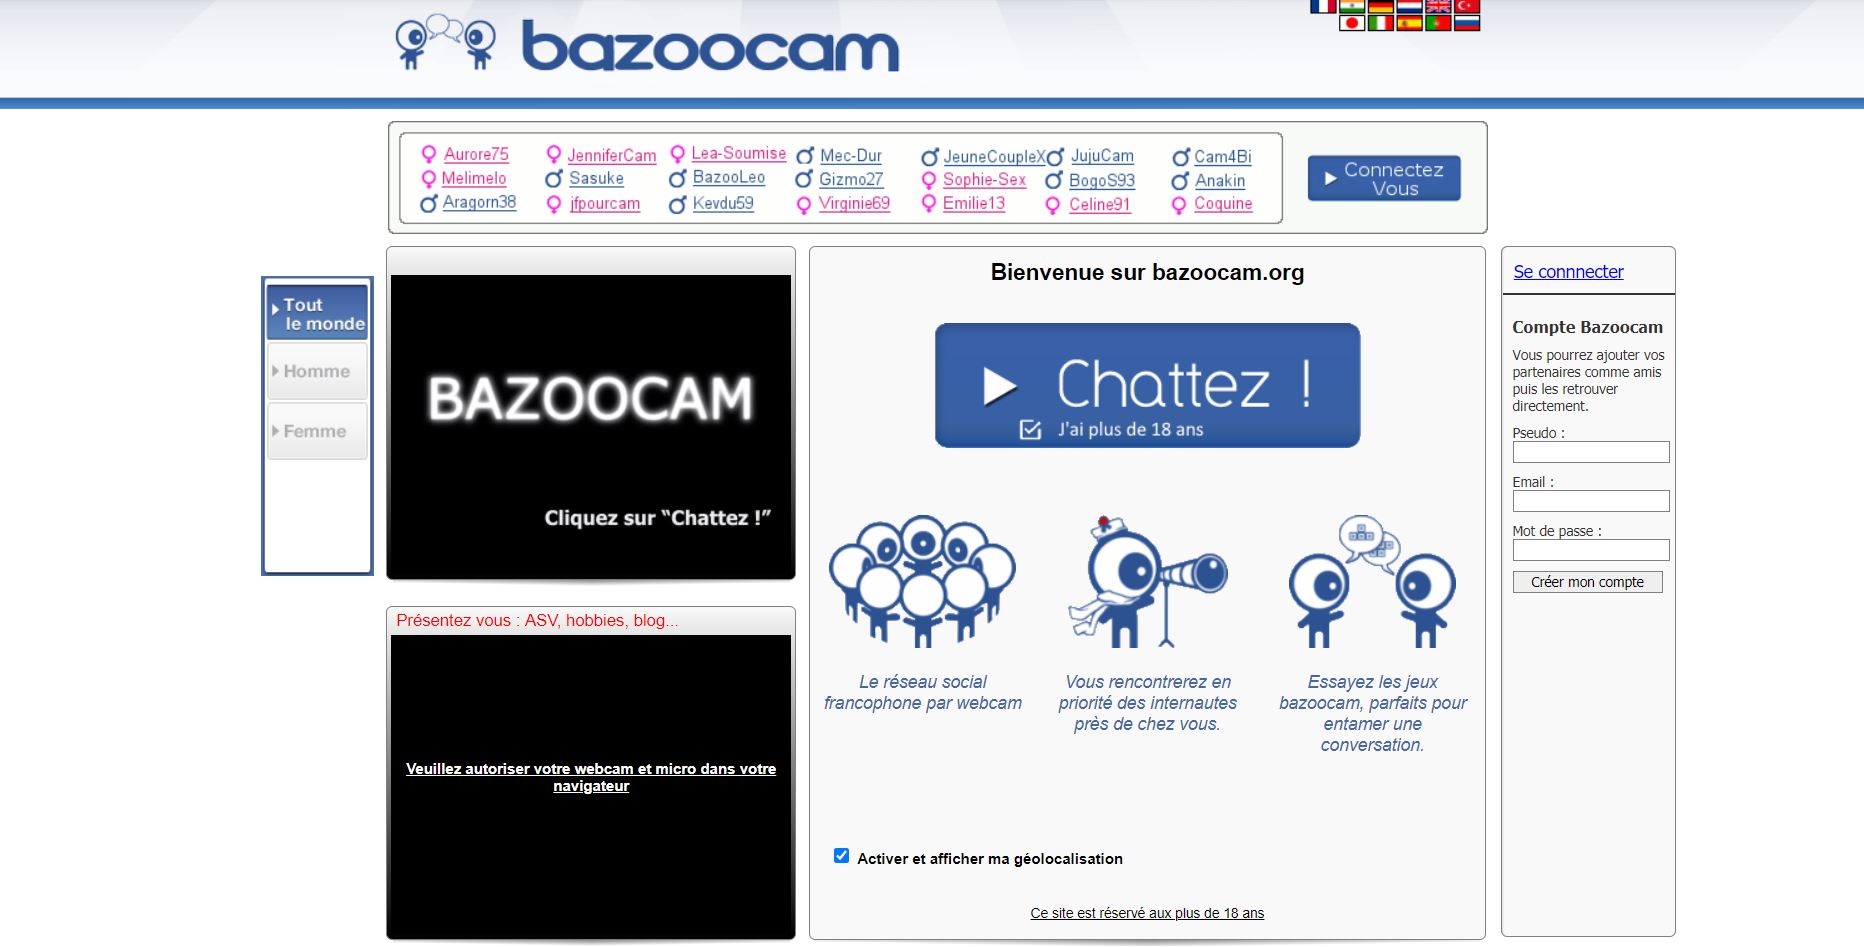 Bazocam Start Your